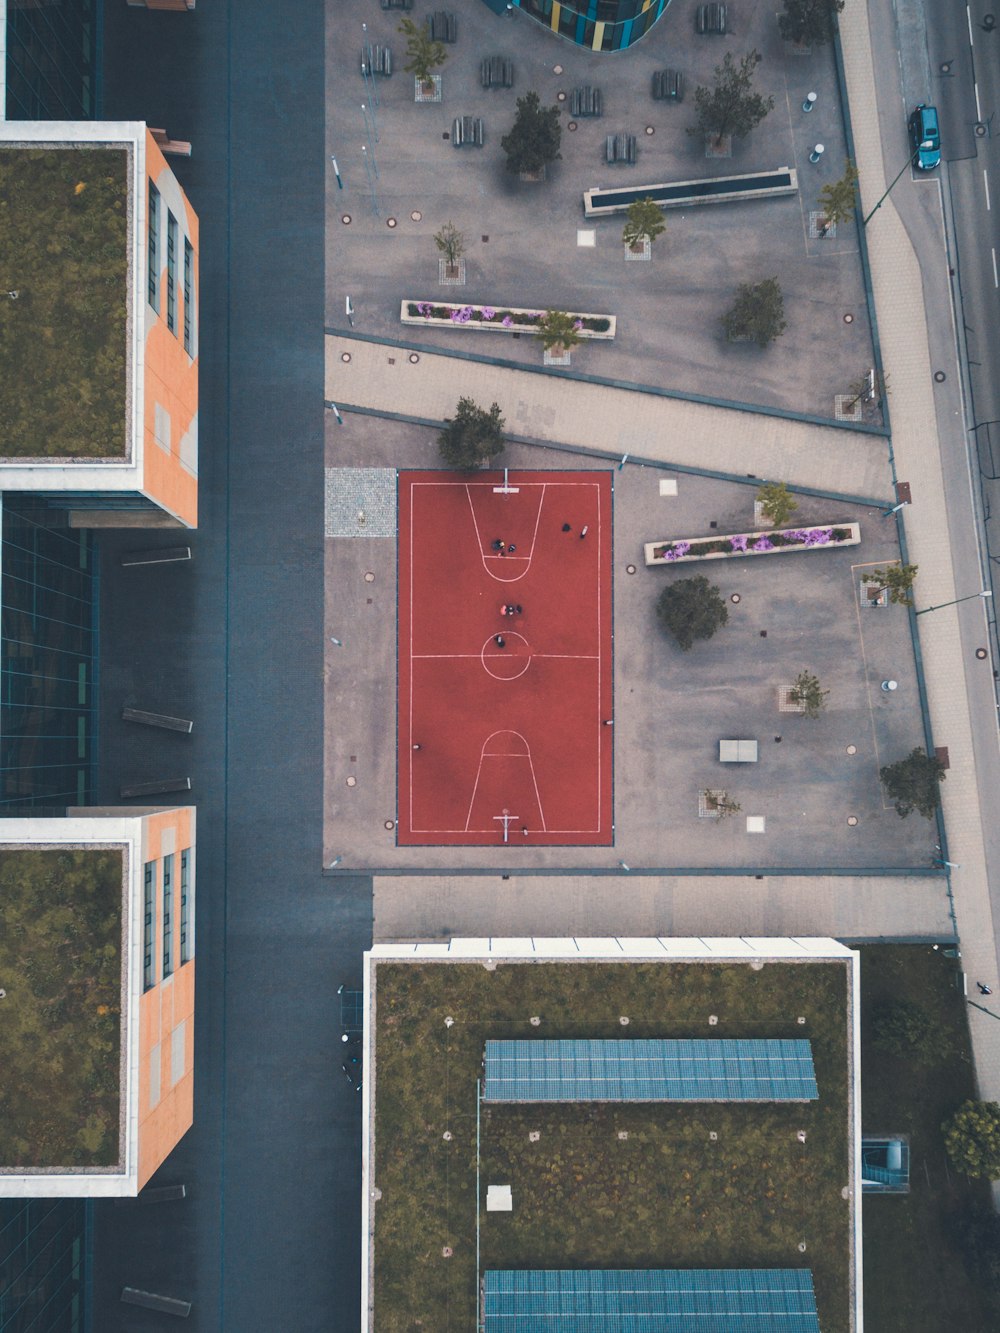 cancha de baloncesto roja cerca de edificios en fotografía aérea